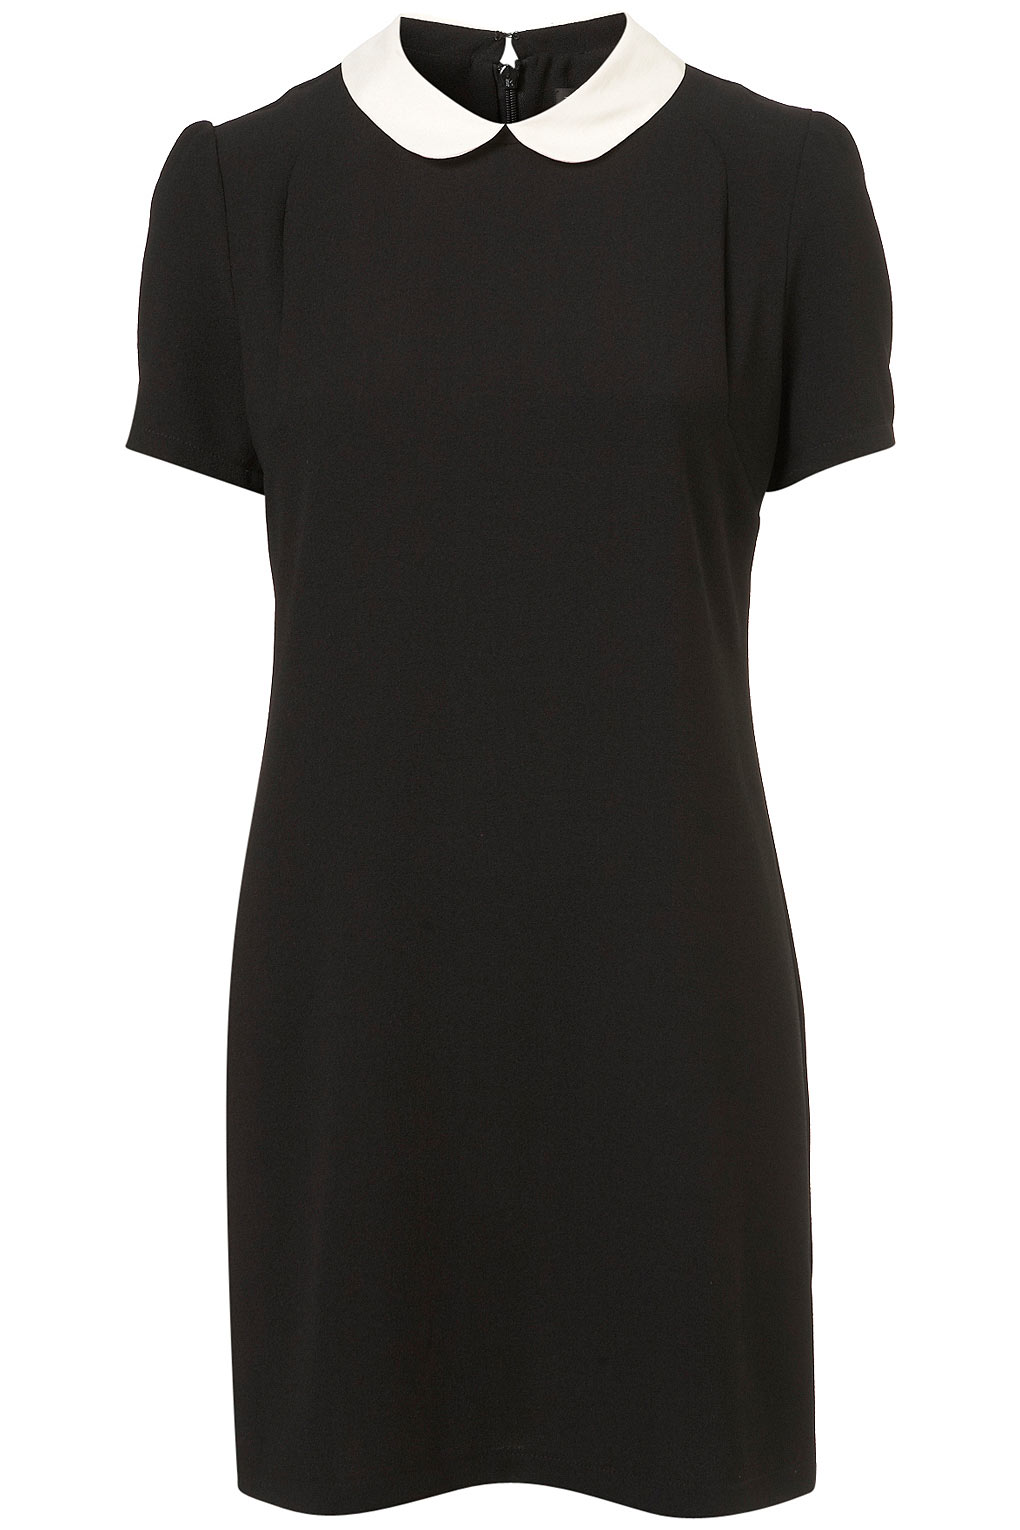 Lyst - Topshop Contrast Collar Shift Dress in Black